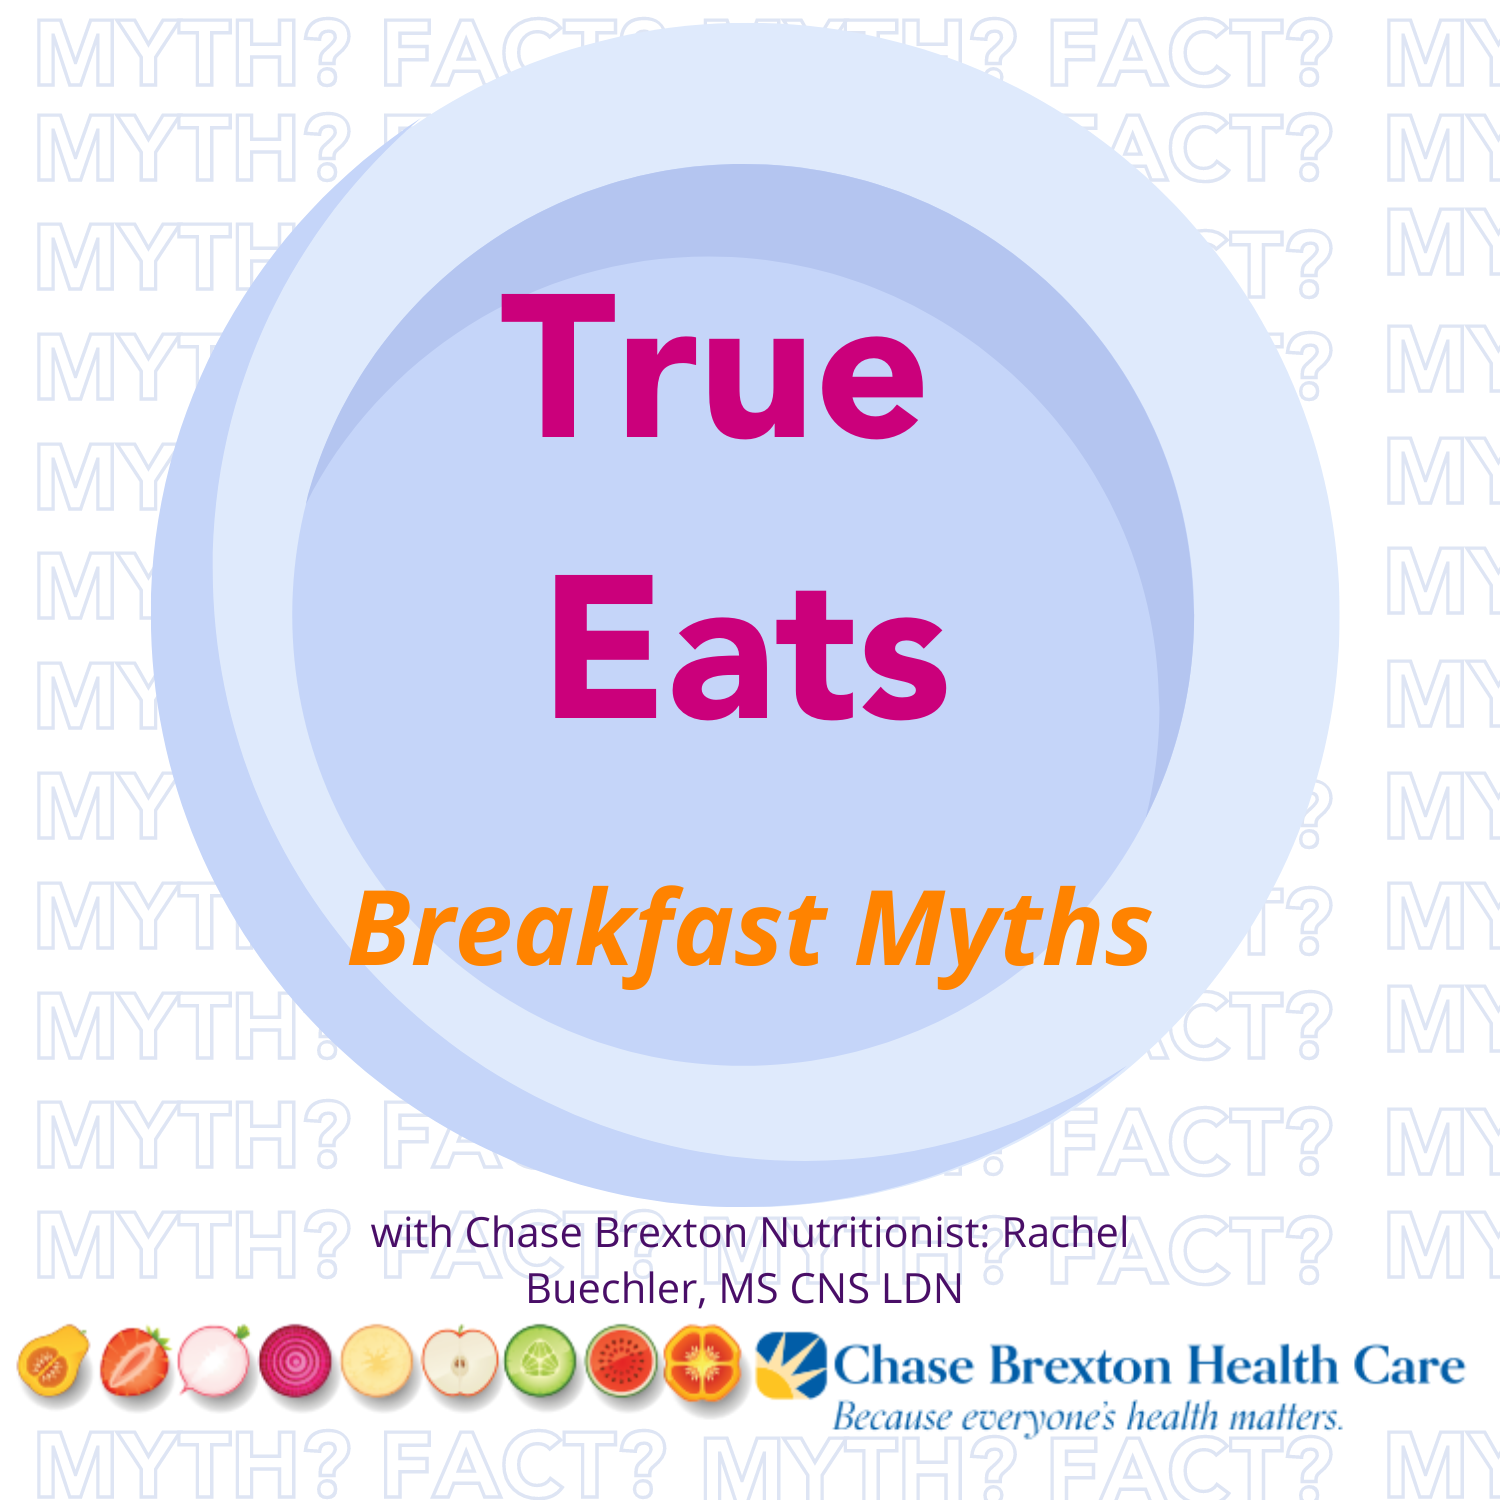 True Eats: Breakfast myths written over a blue plate. 